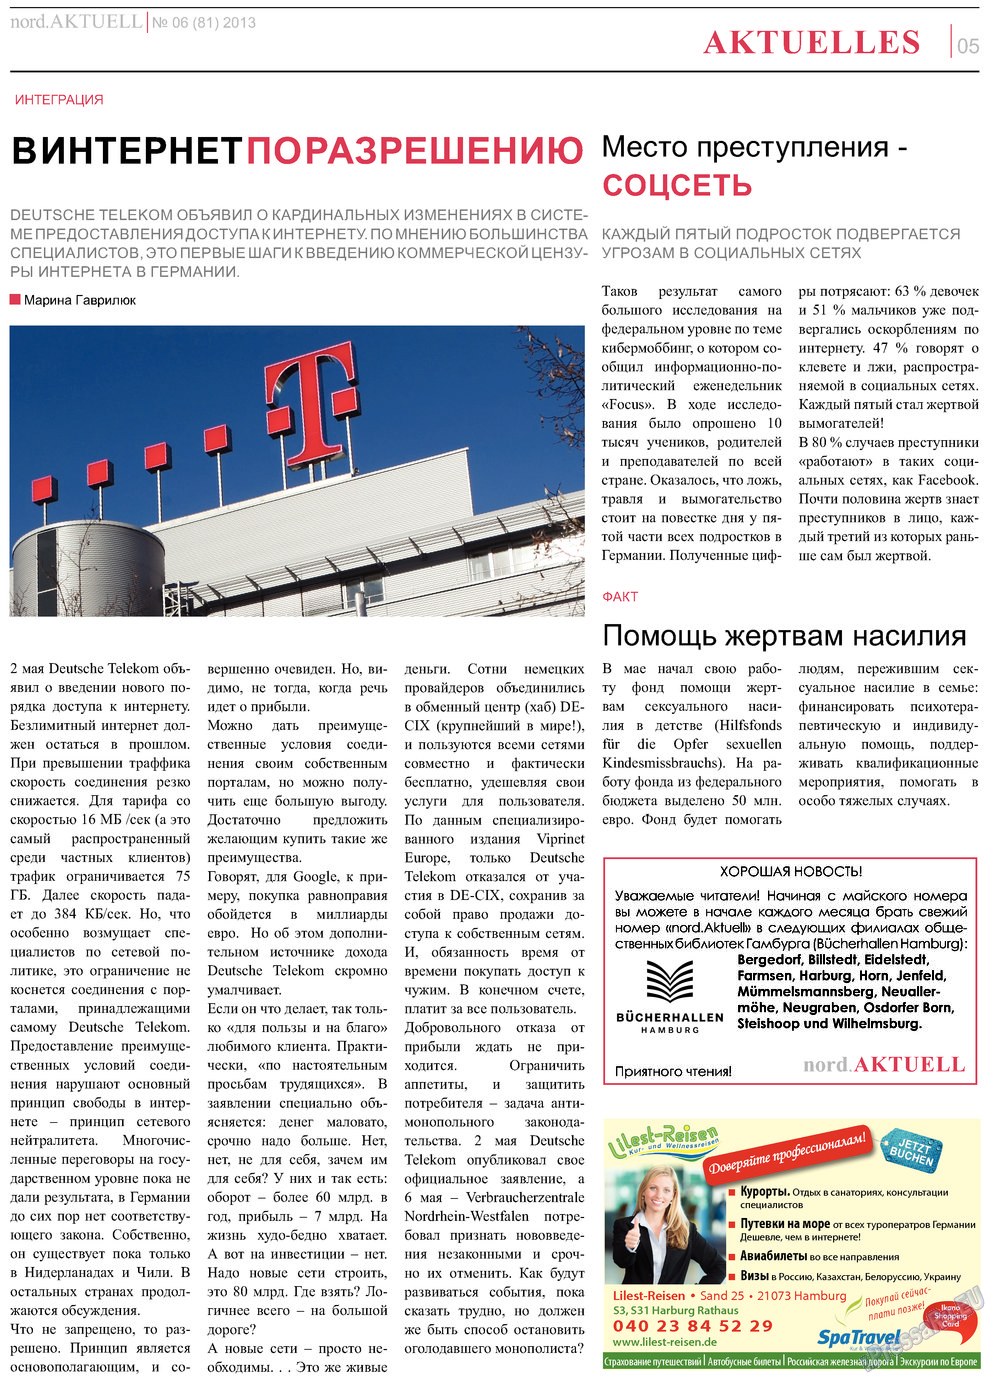 nord.Aktuell, газета. 2013 №6 стр.5